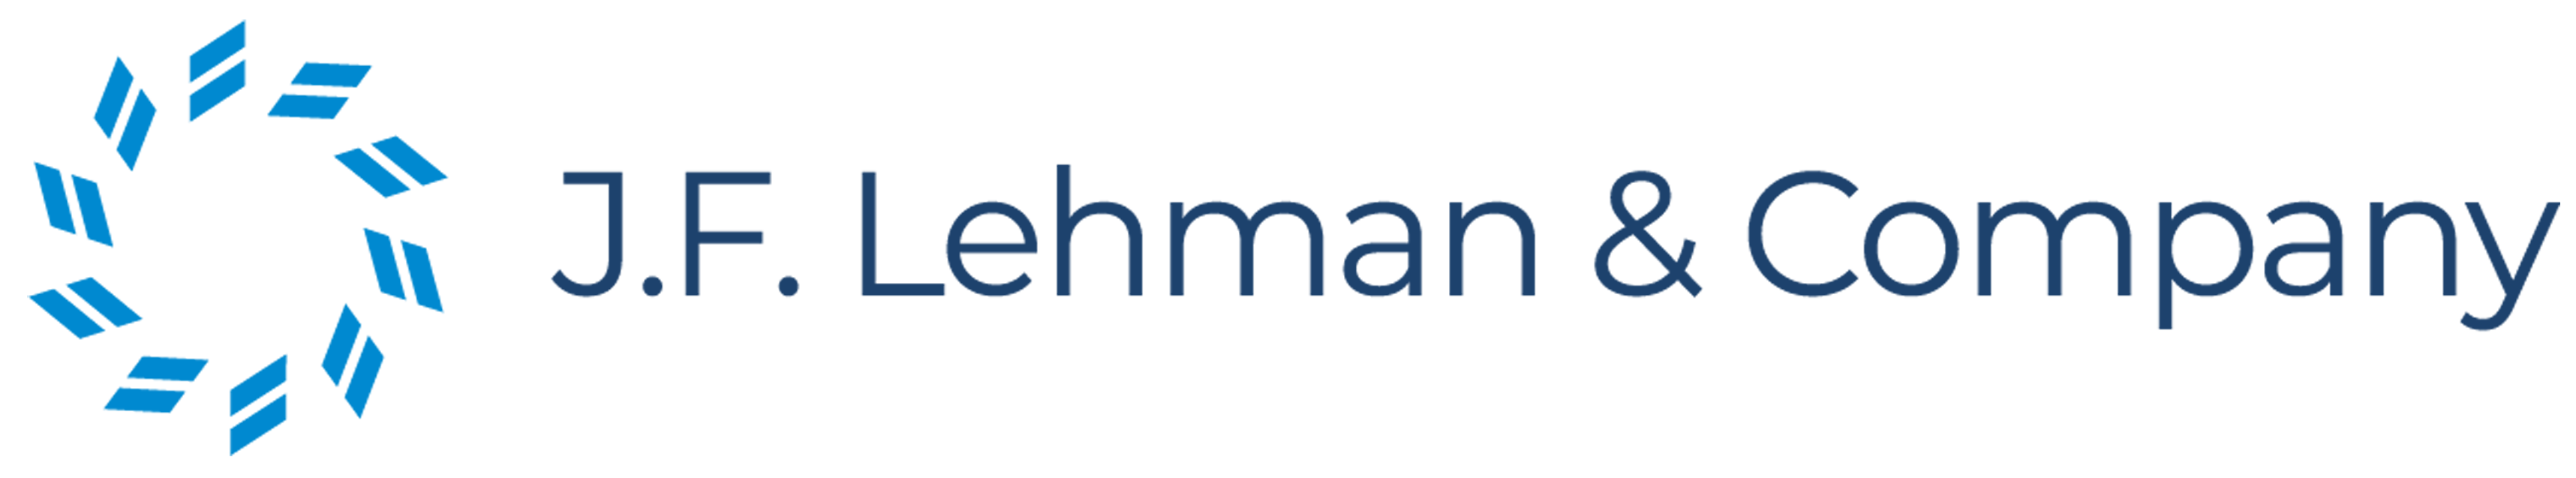 J.F. Lehman & Company Announces Promotions, January 21 2009